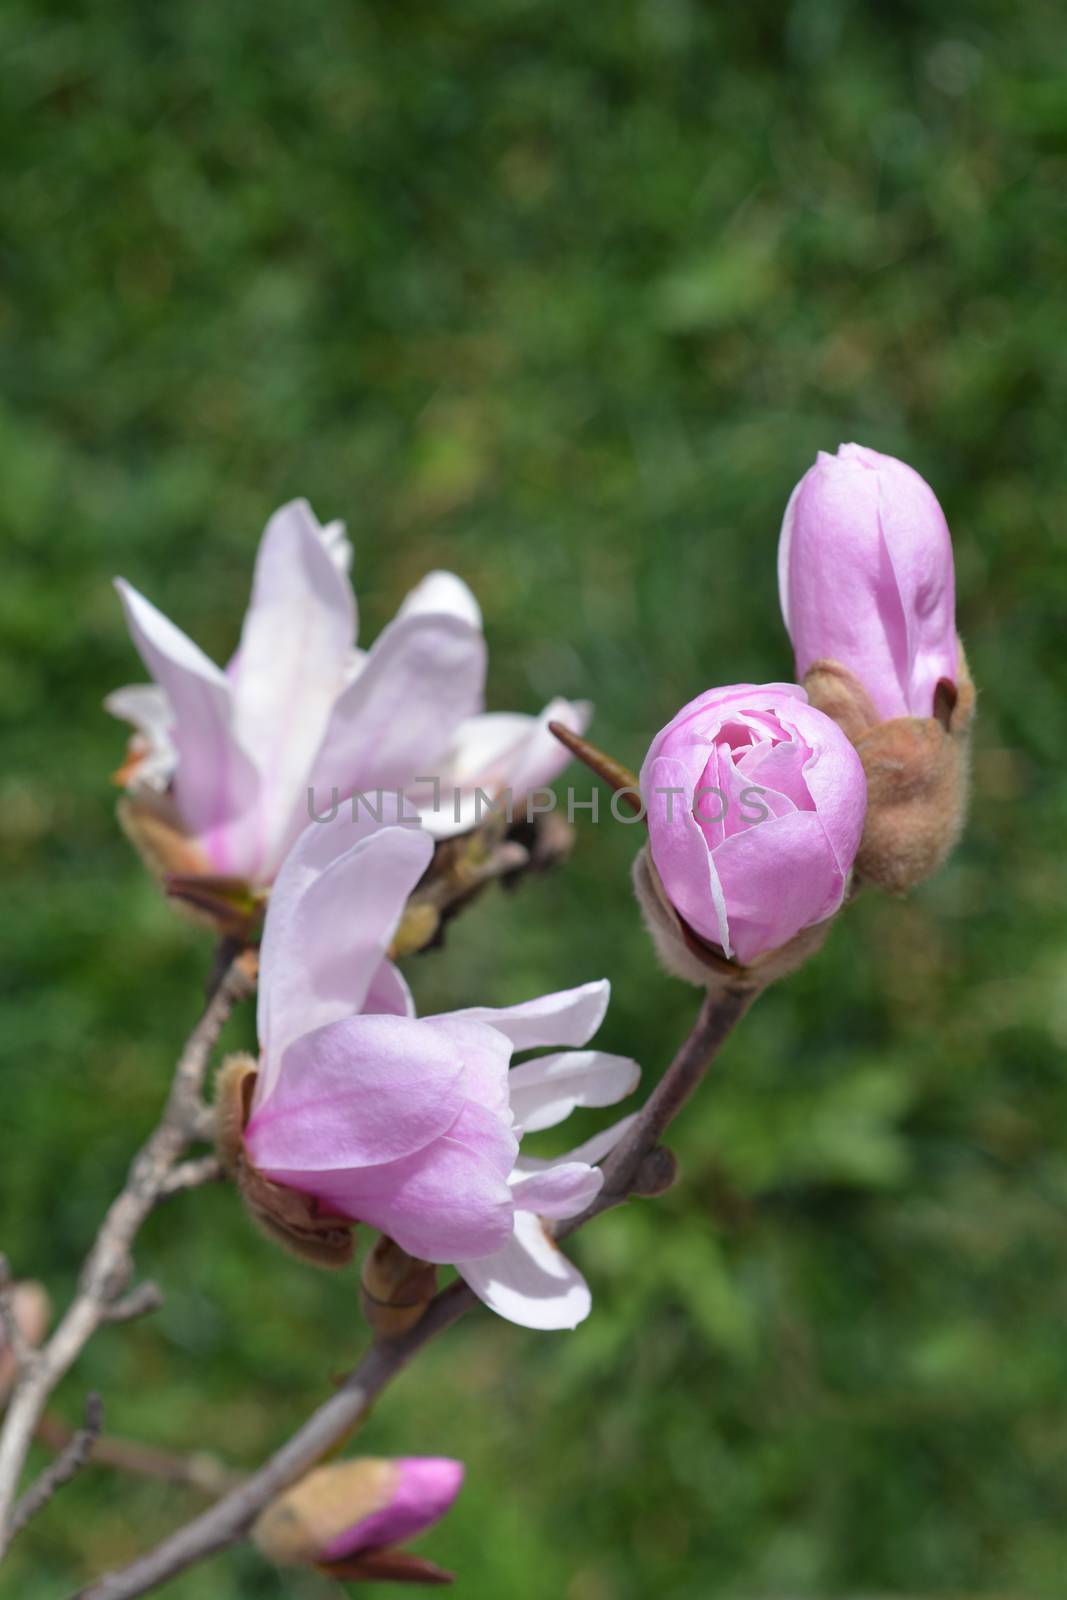 Star magnolia by nahhan